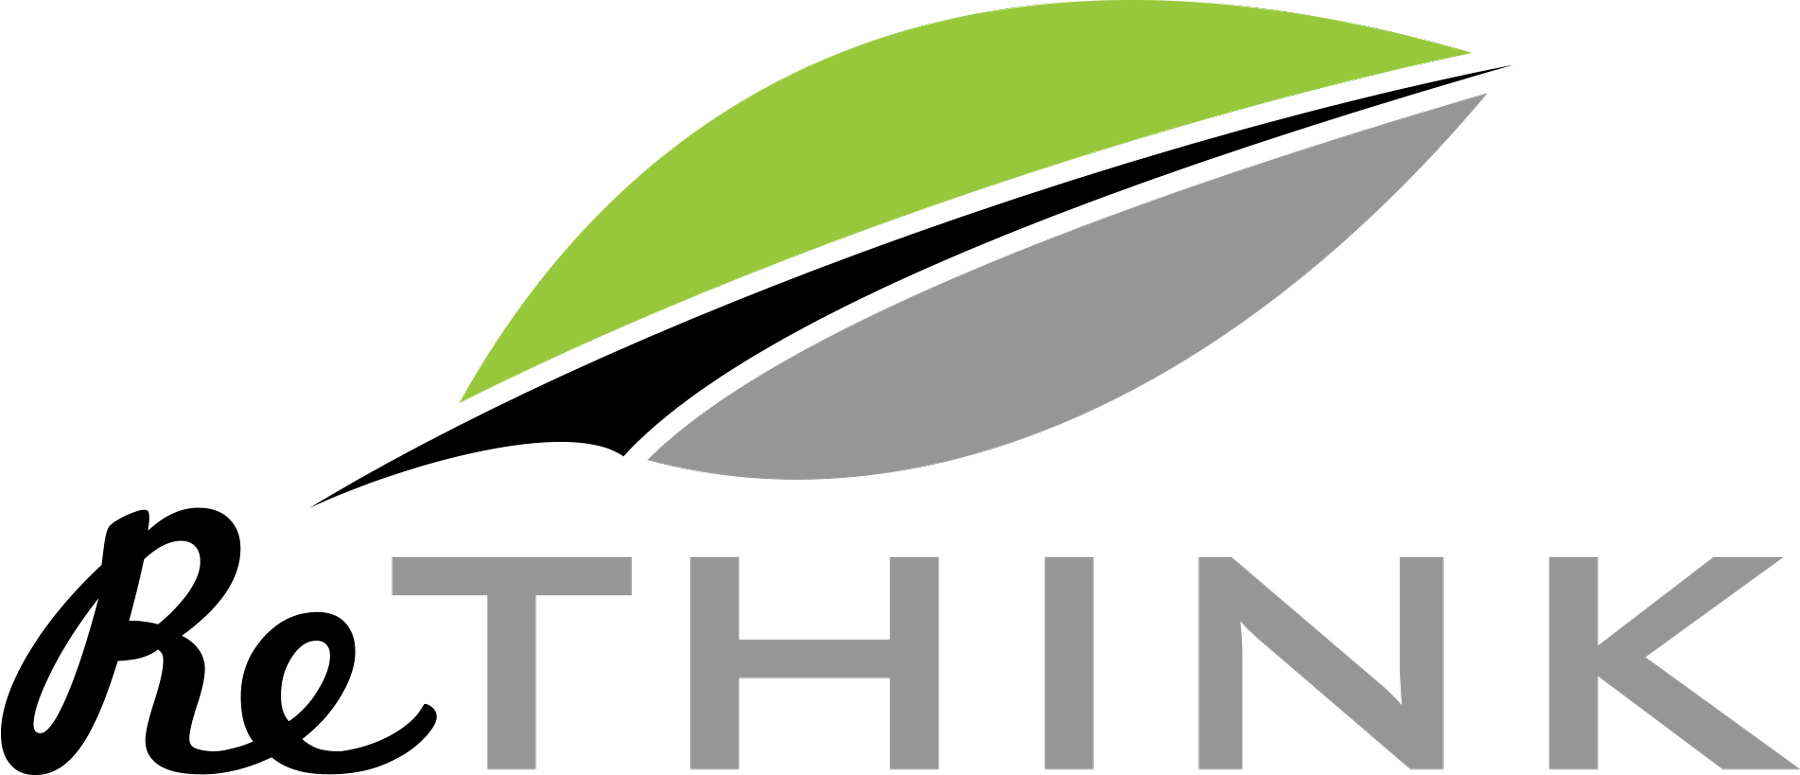 Re-Think logo